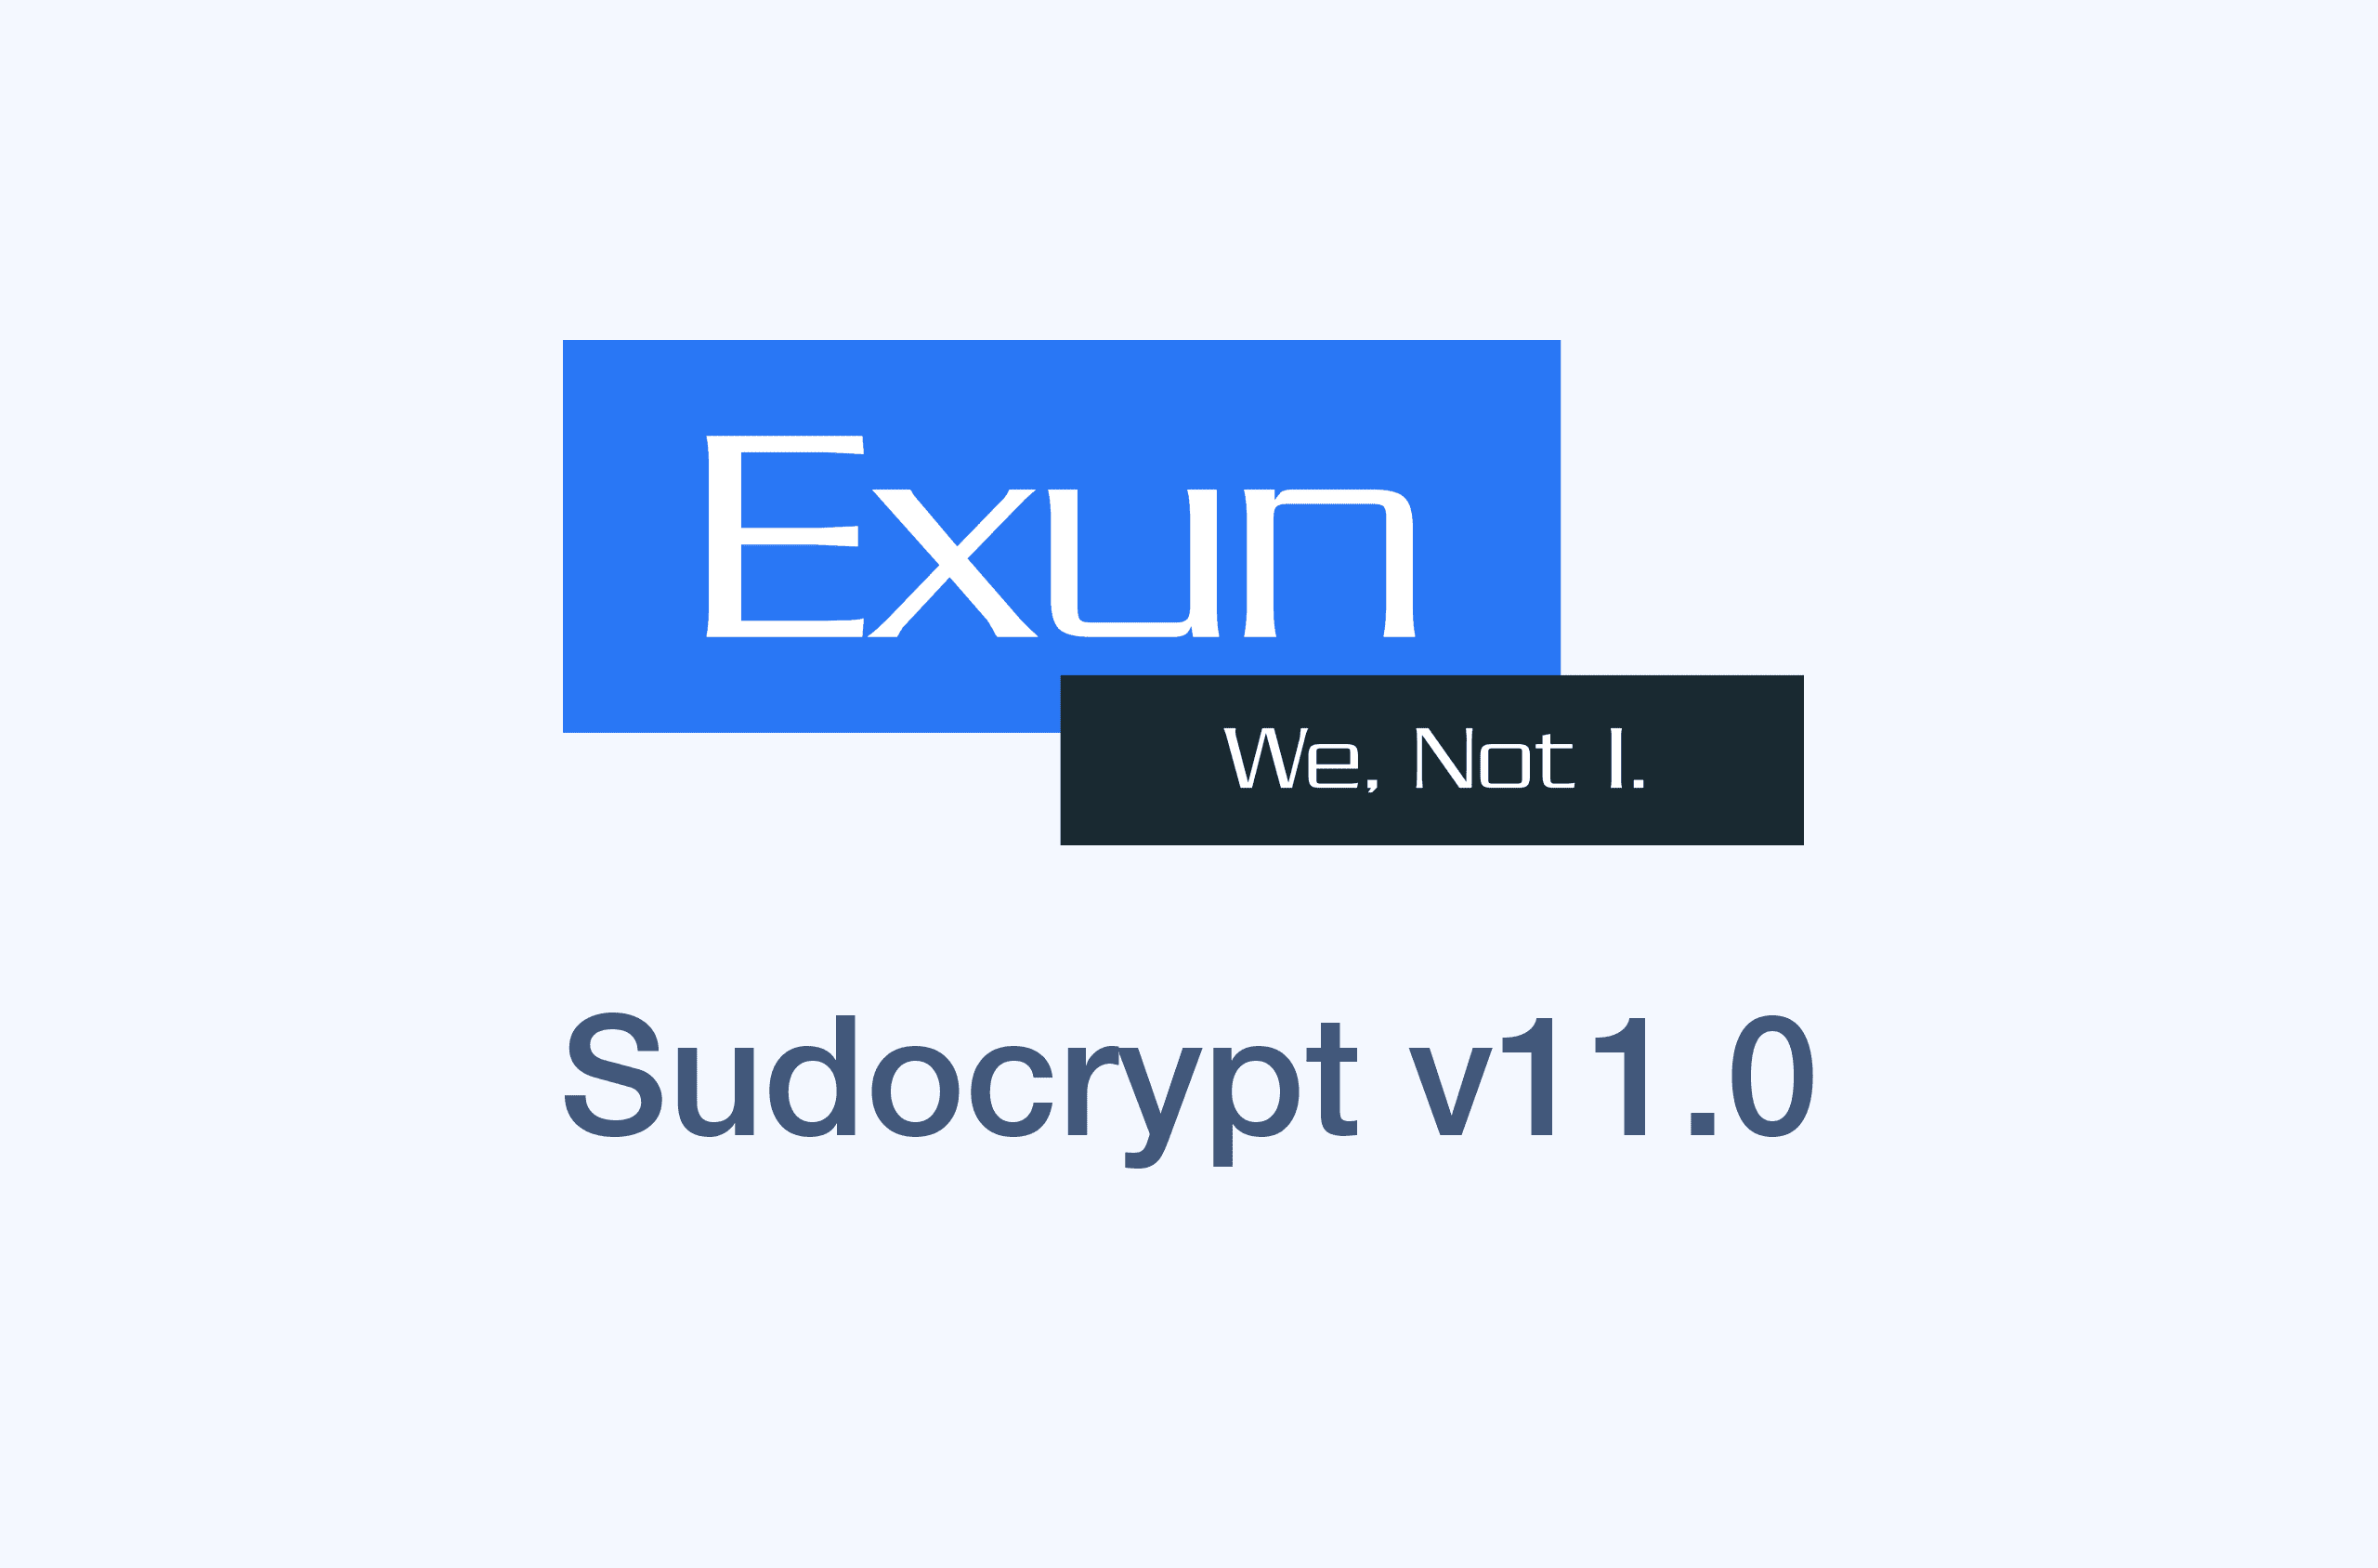 Sudocrypt v11.0's image